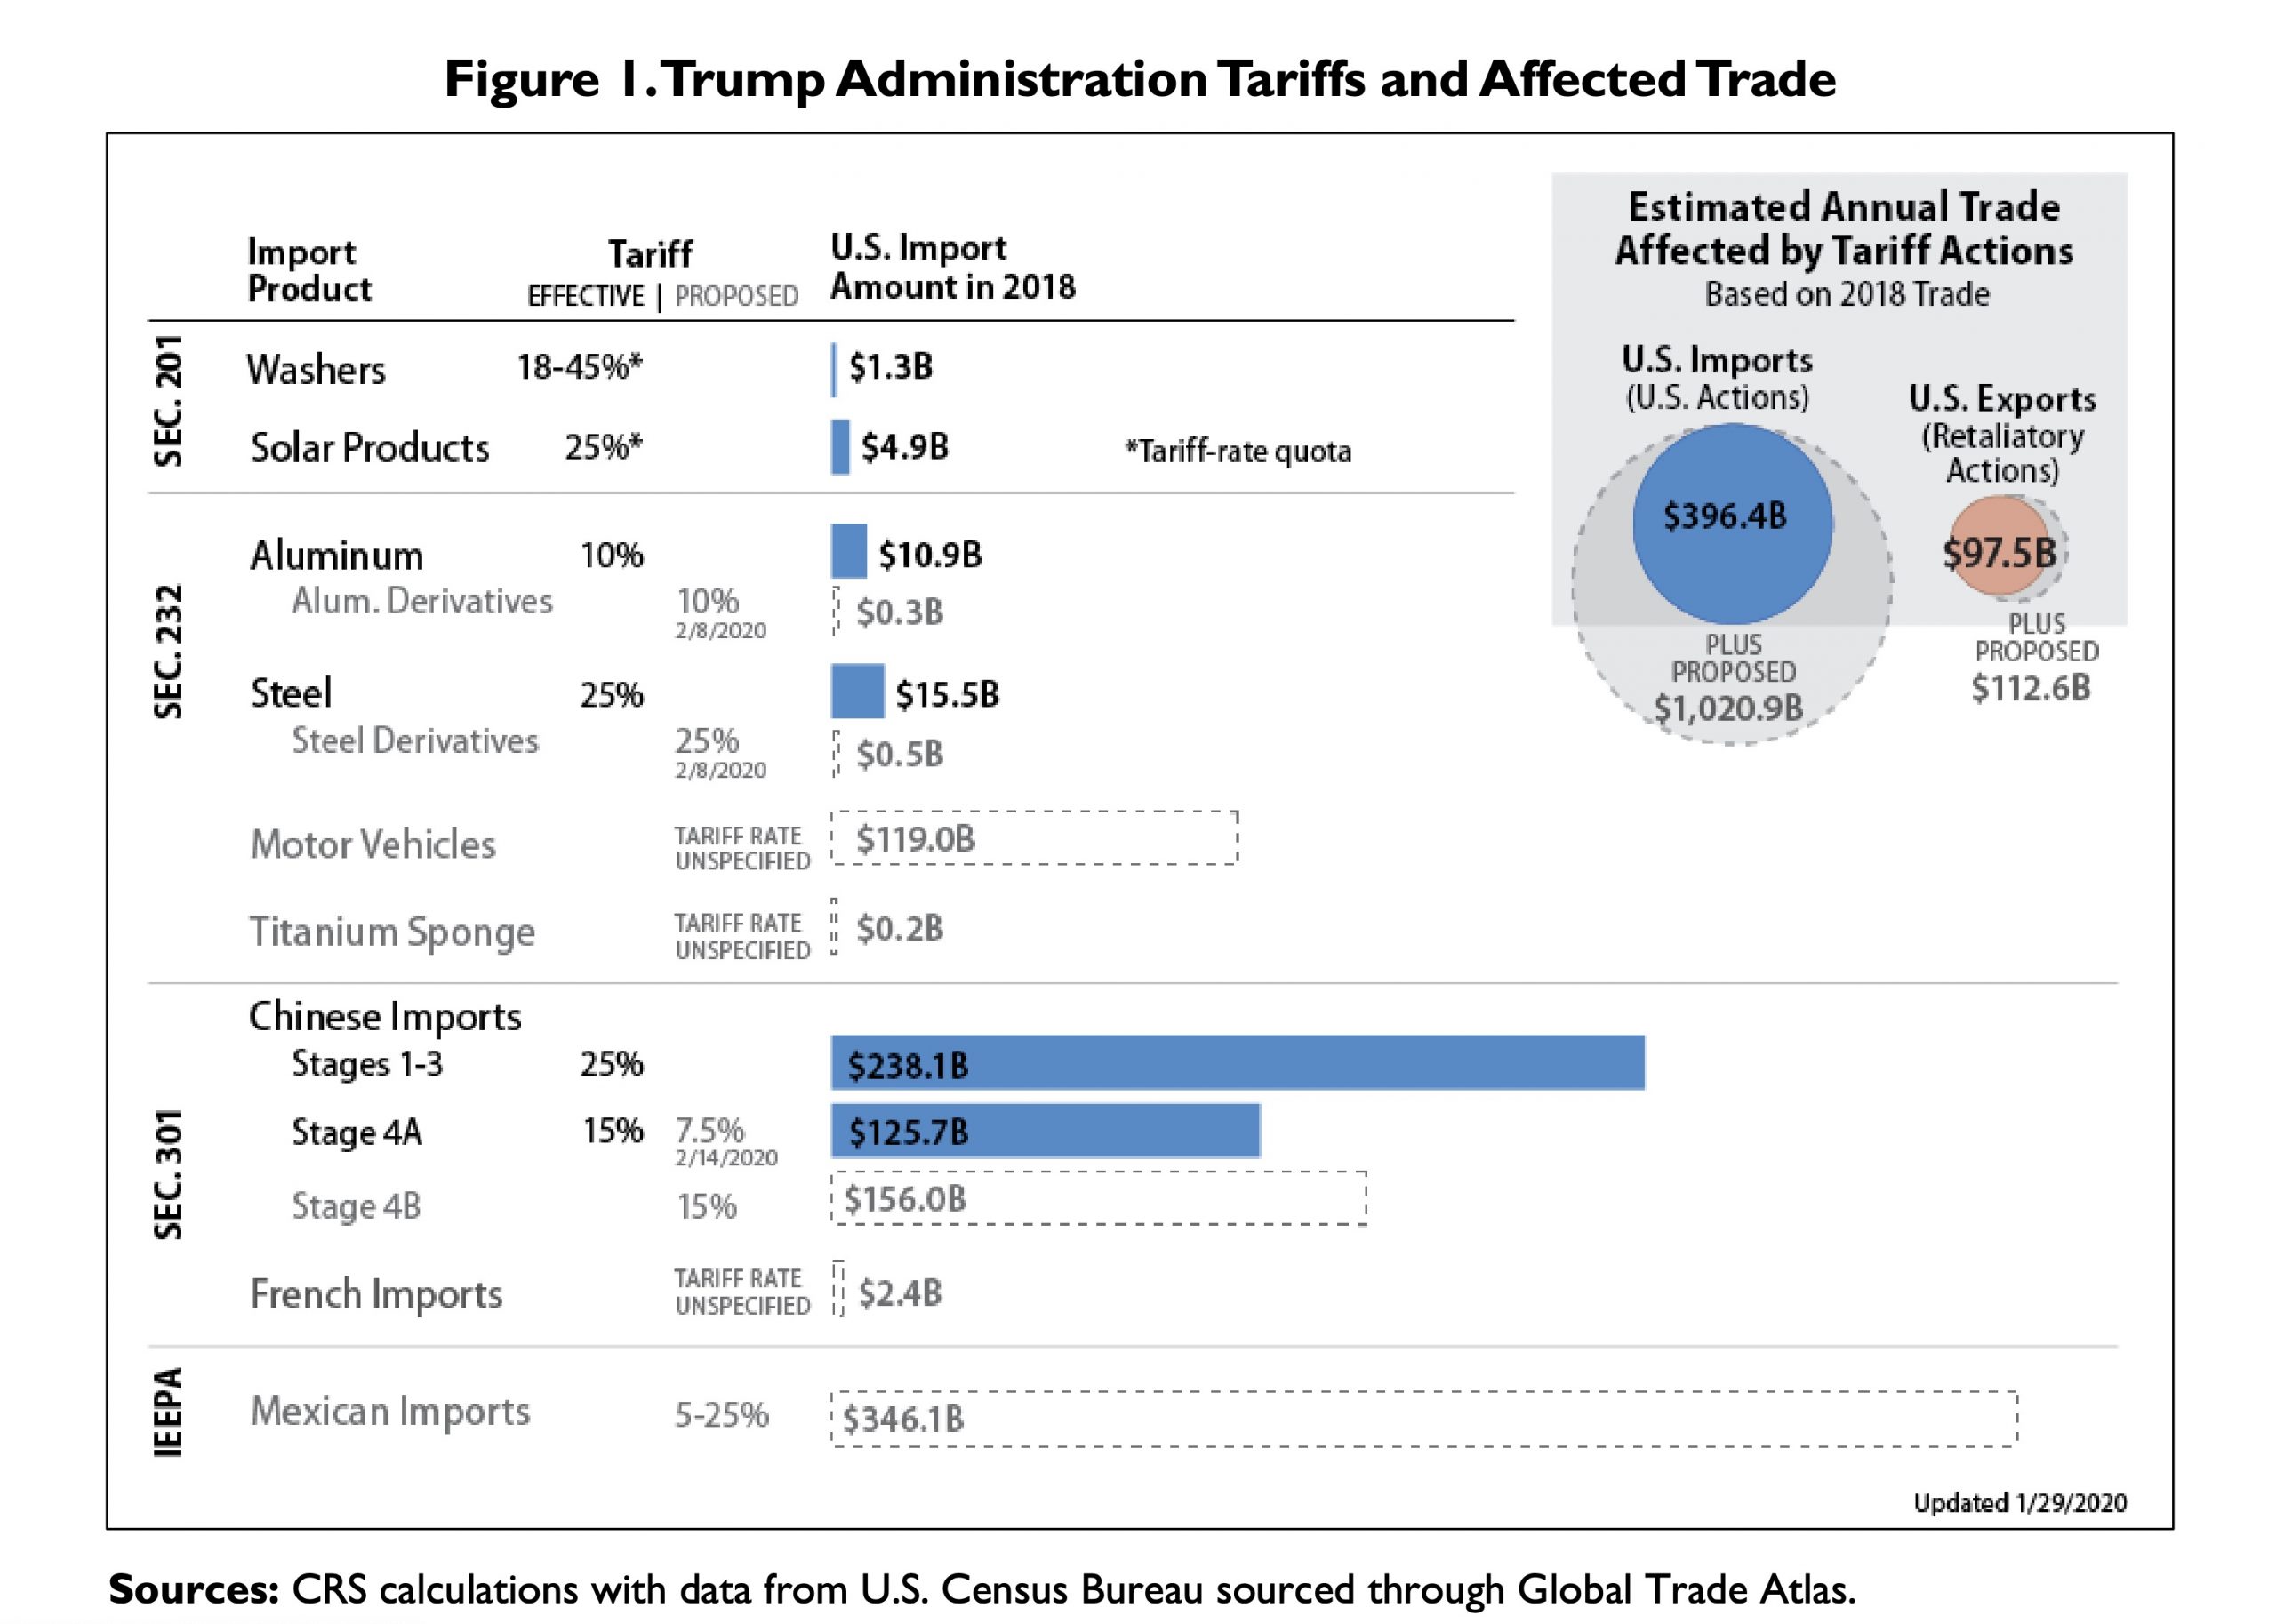 Escalating U.S. Tariffs: Affected Trade